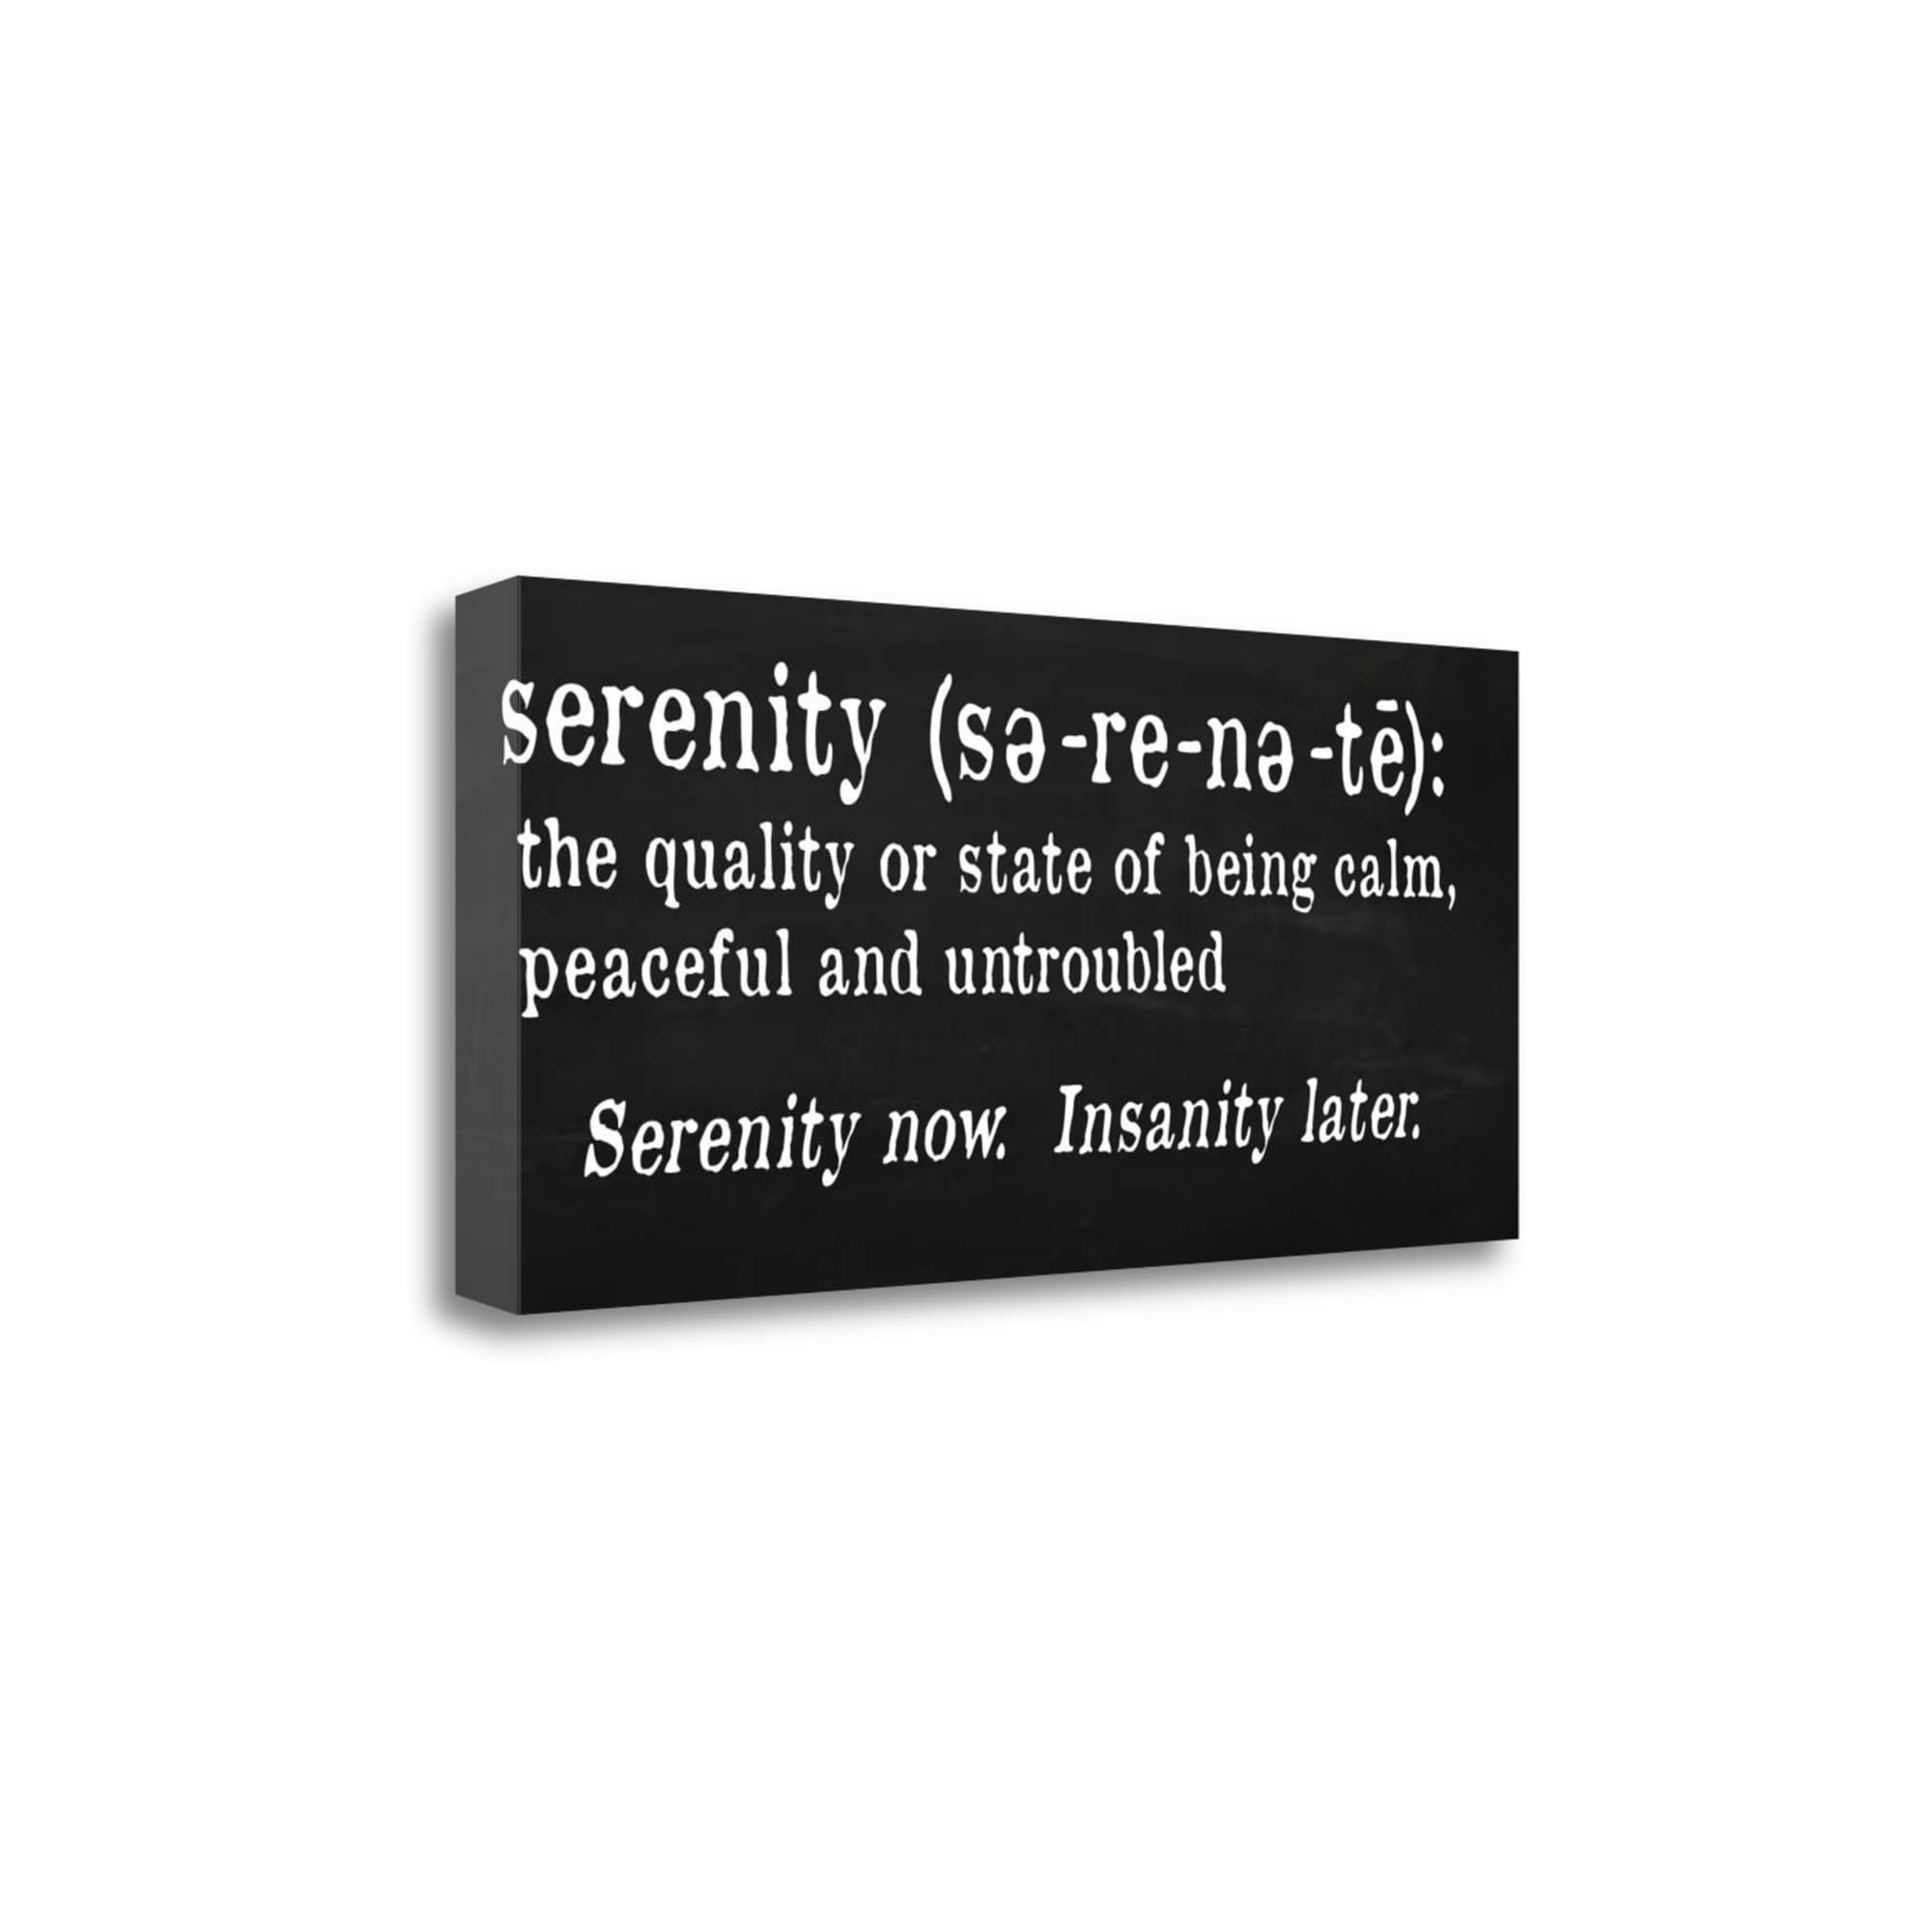 serenity definition